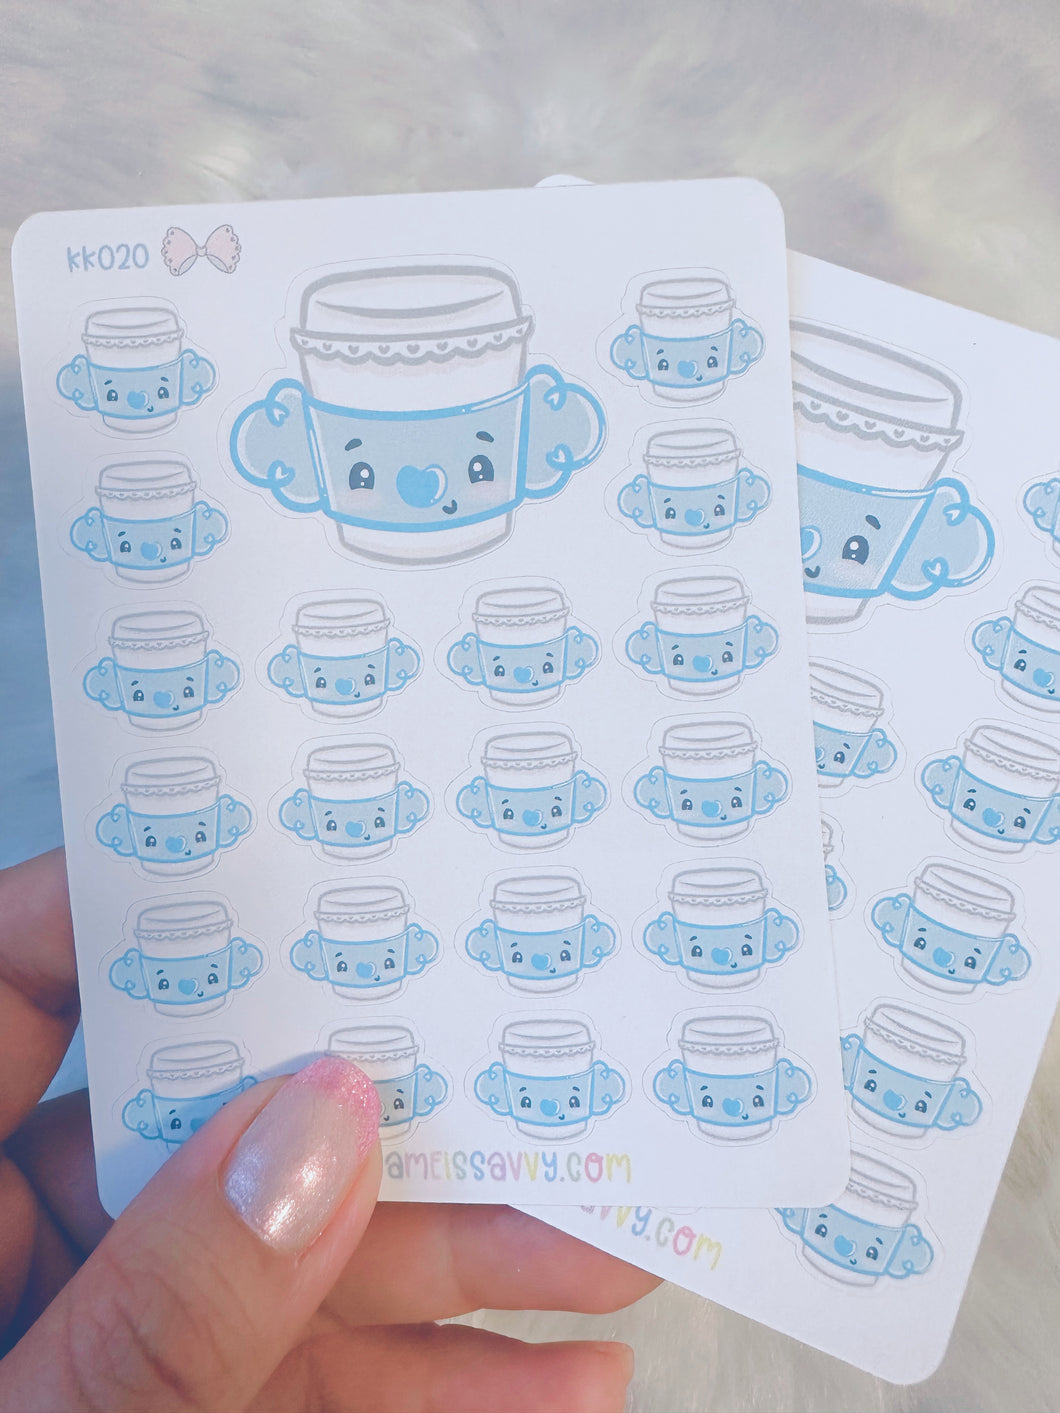 KK020 - Coffee Kohei Sticker Sheet